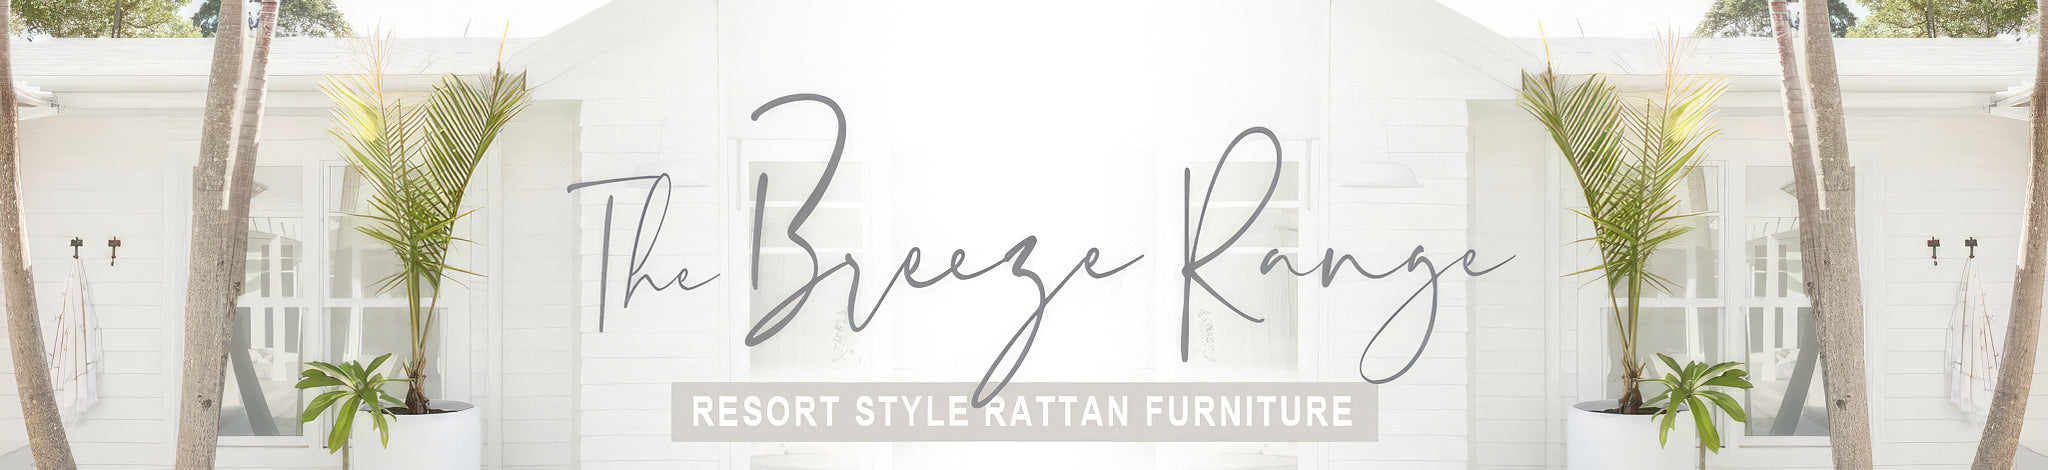 Breeze Rattan Furniture Range